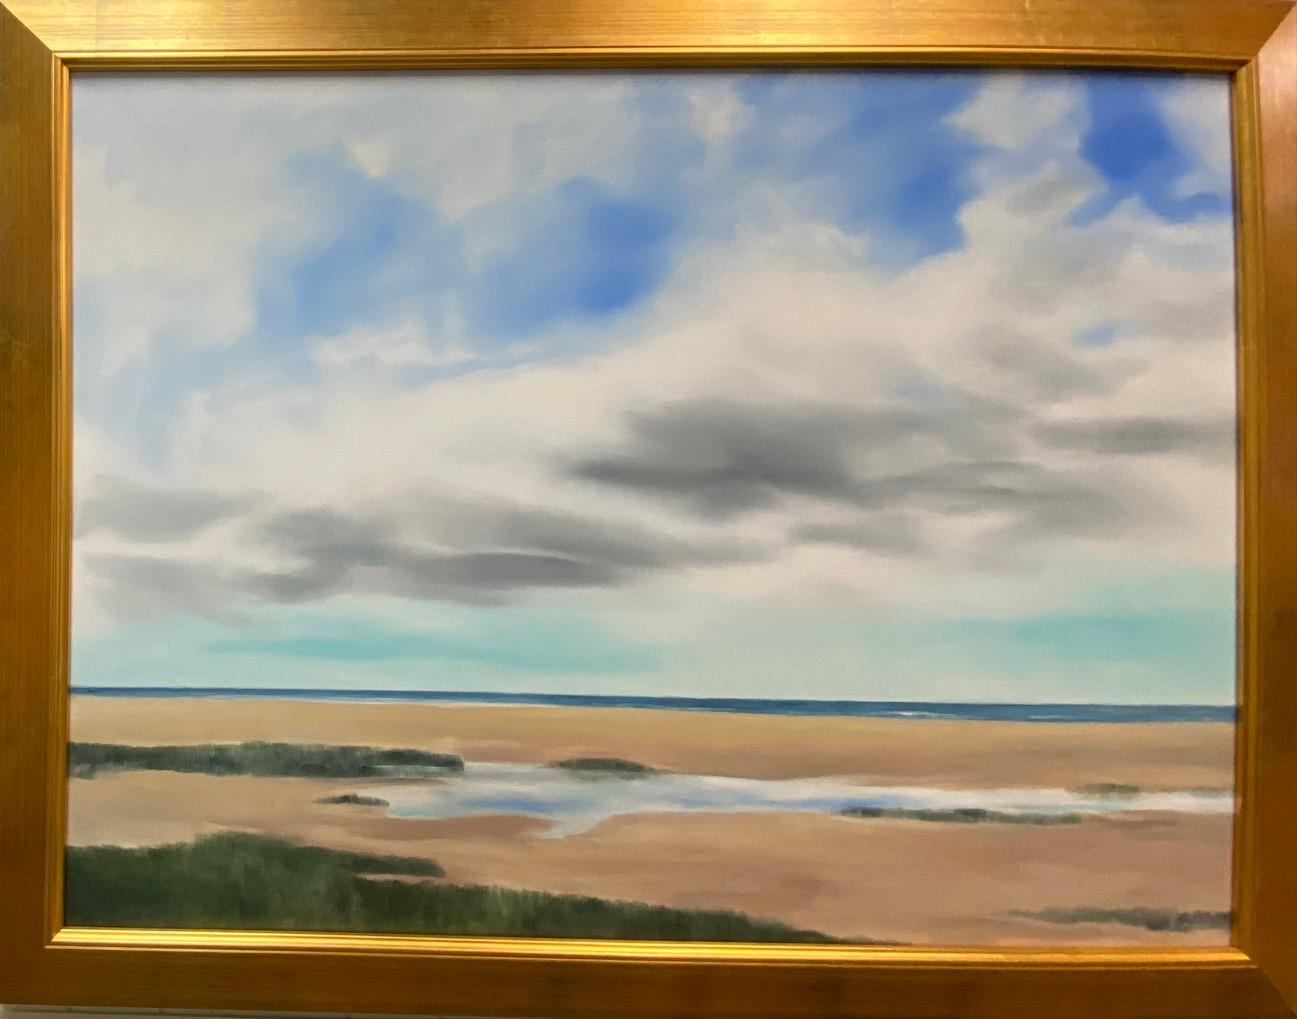 Rinaldo Skalamera Landscape Painting - Cape Cod Dunes, original 36x48 contemporary marine landscape